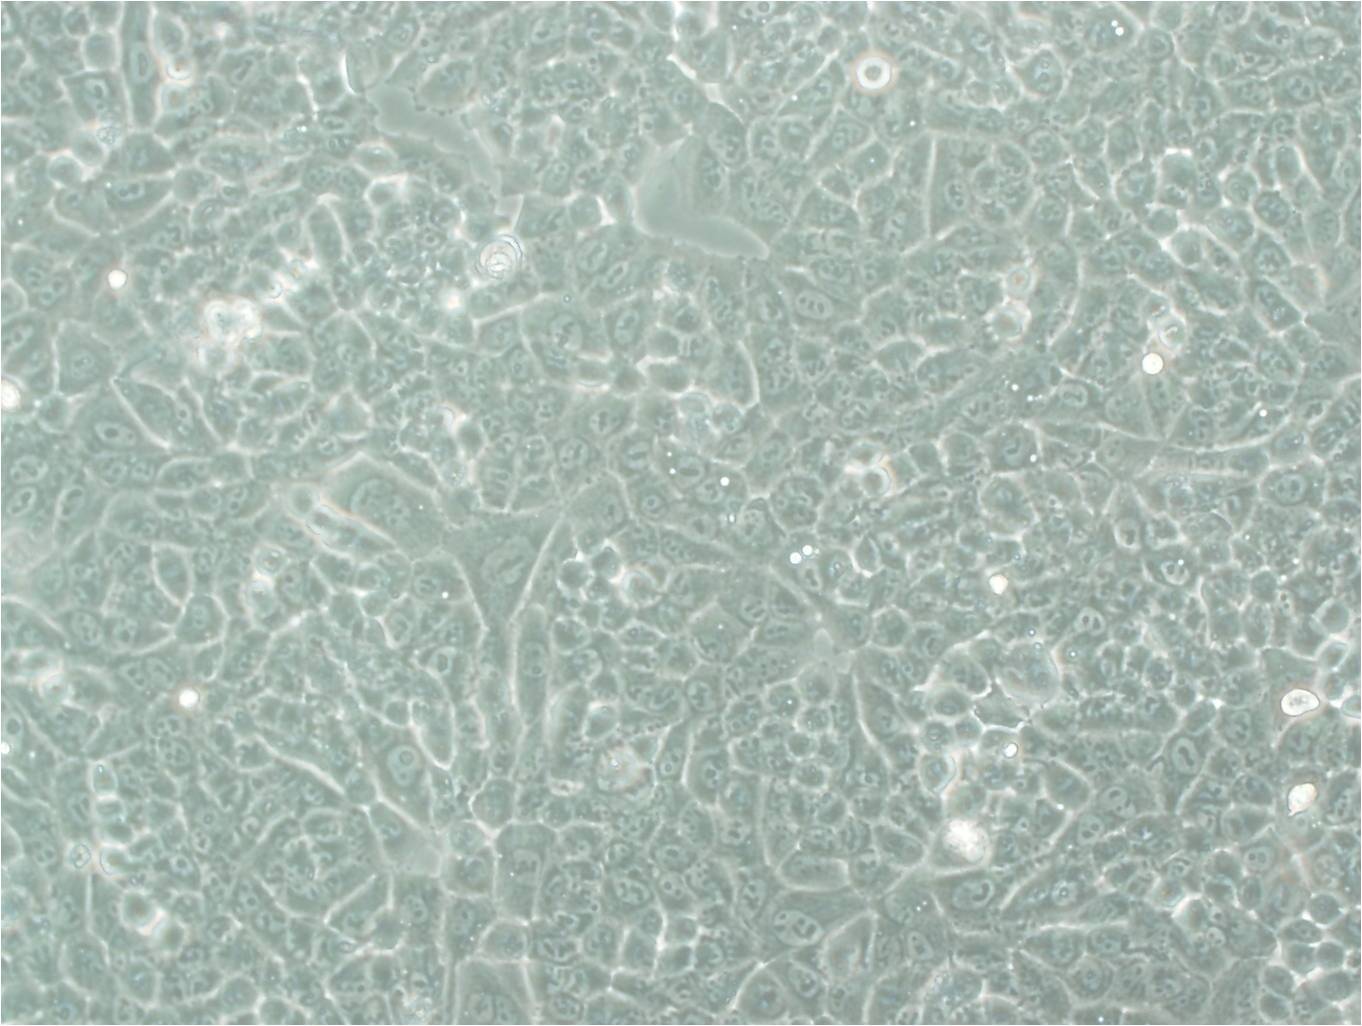 FO [Mouse myeloma]:小鼠骨髓瘤复苏细胞(提供STR鉴定图谱)